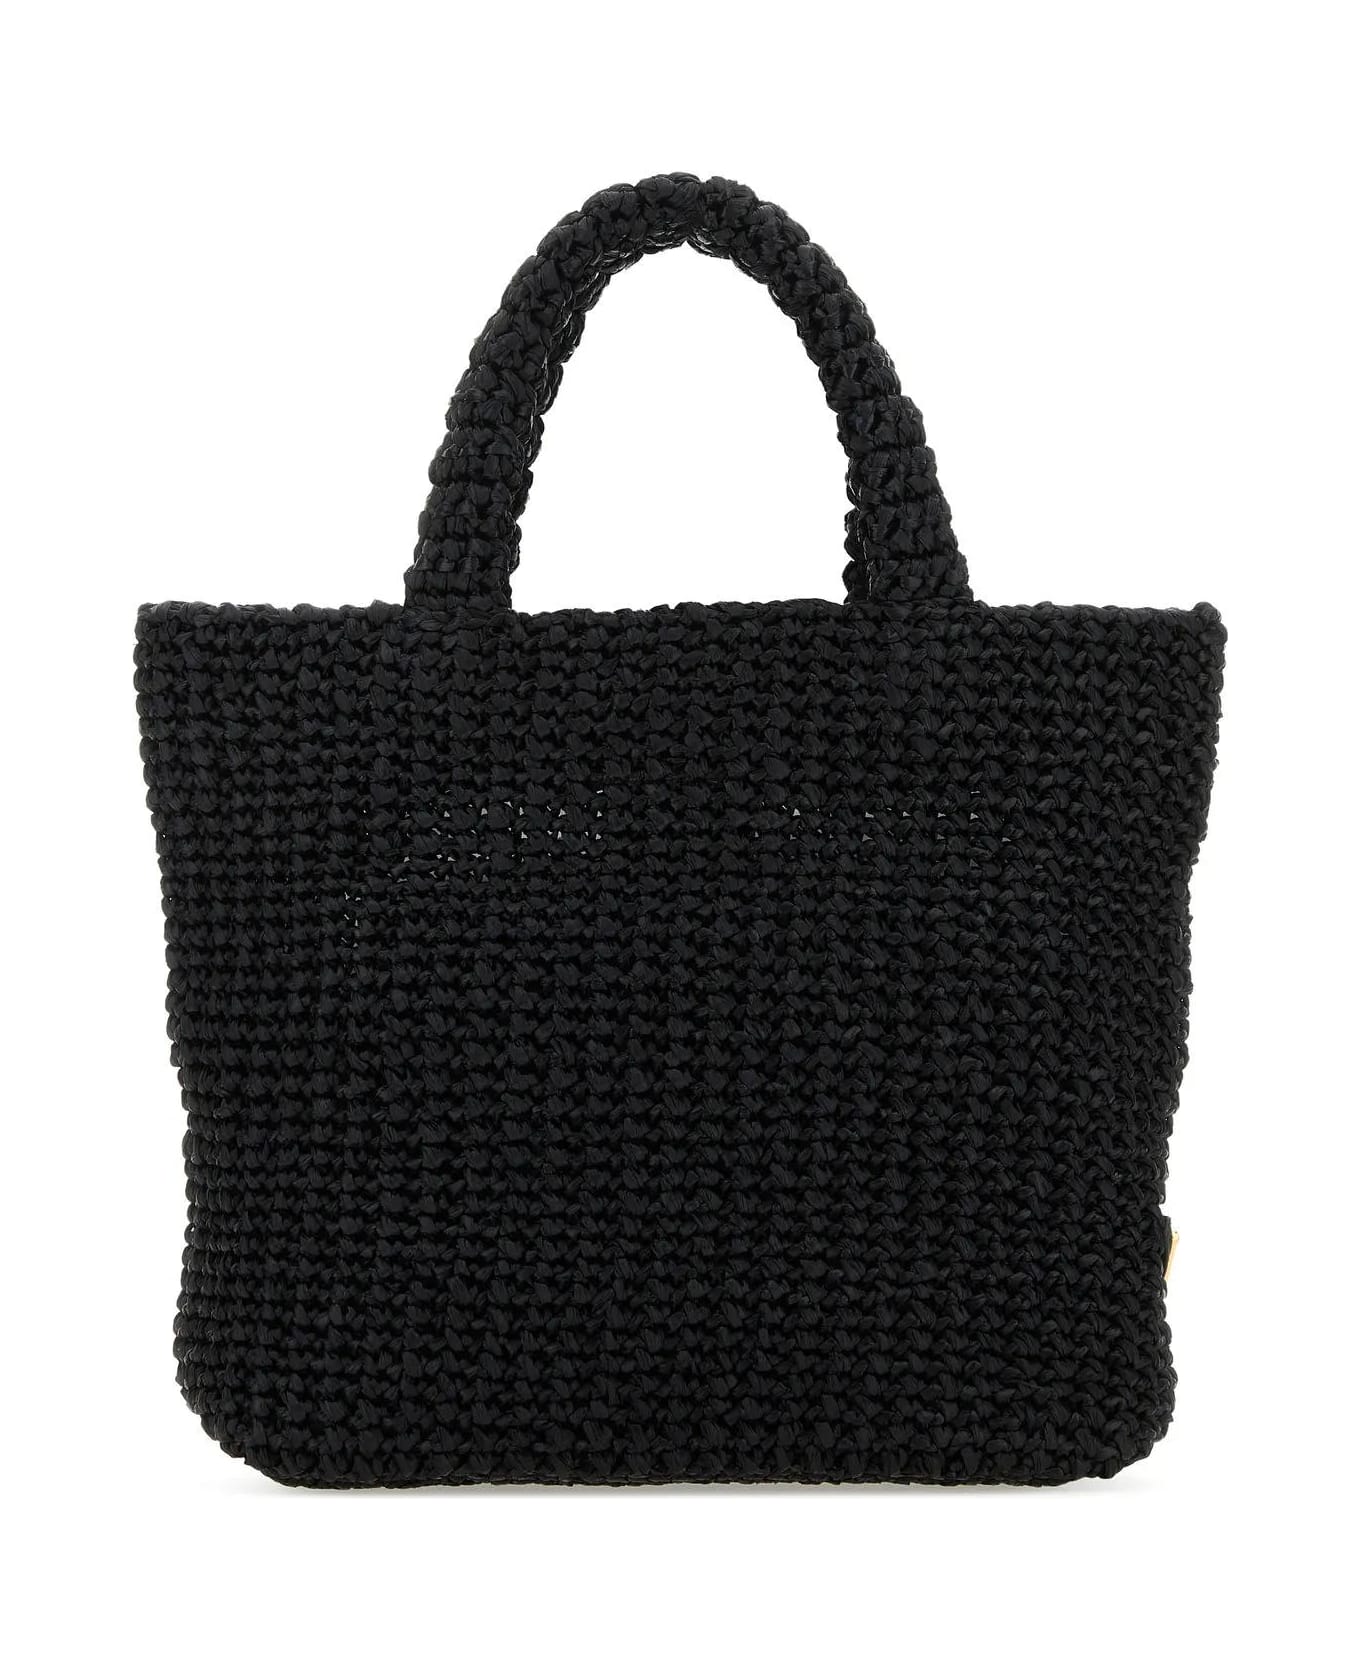 Prada Black Straw Handbag - Black トートバッグ